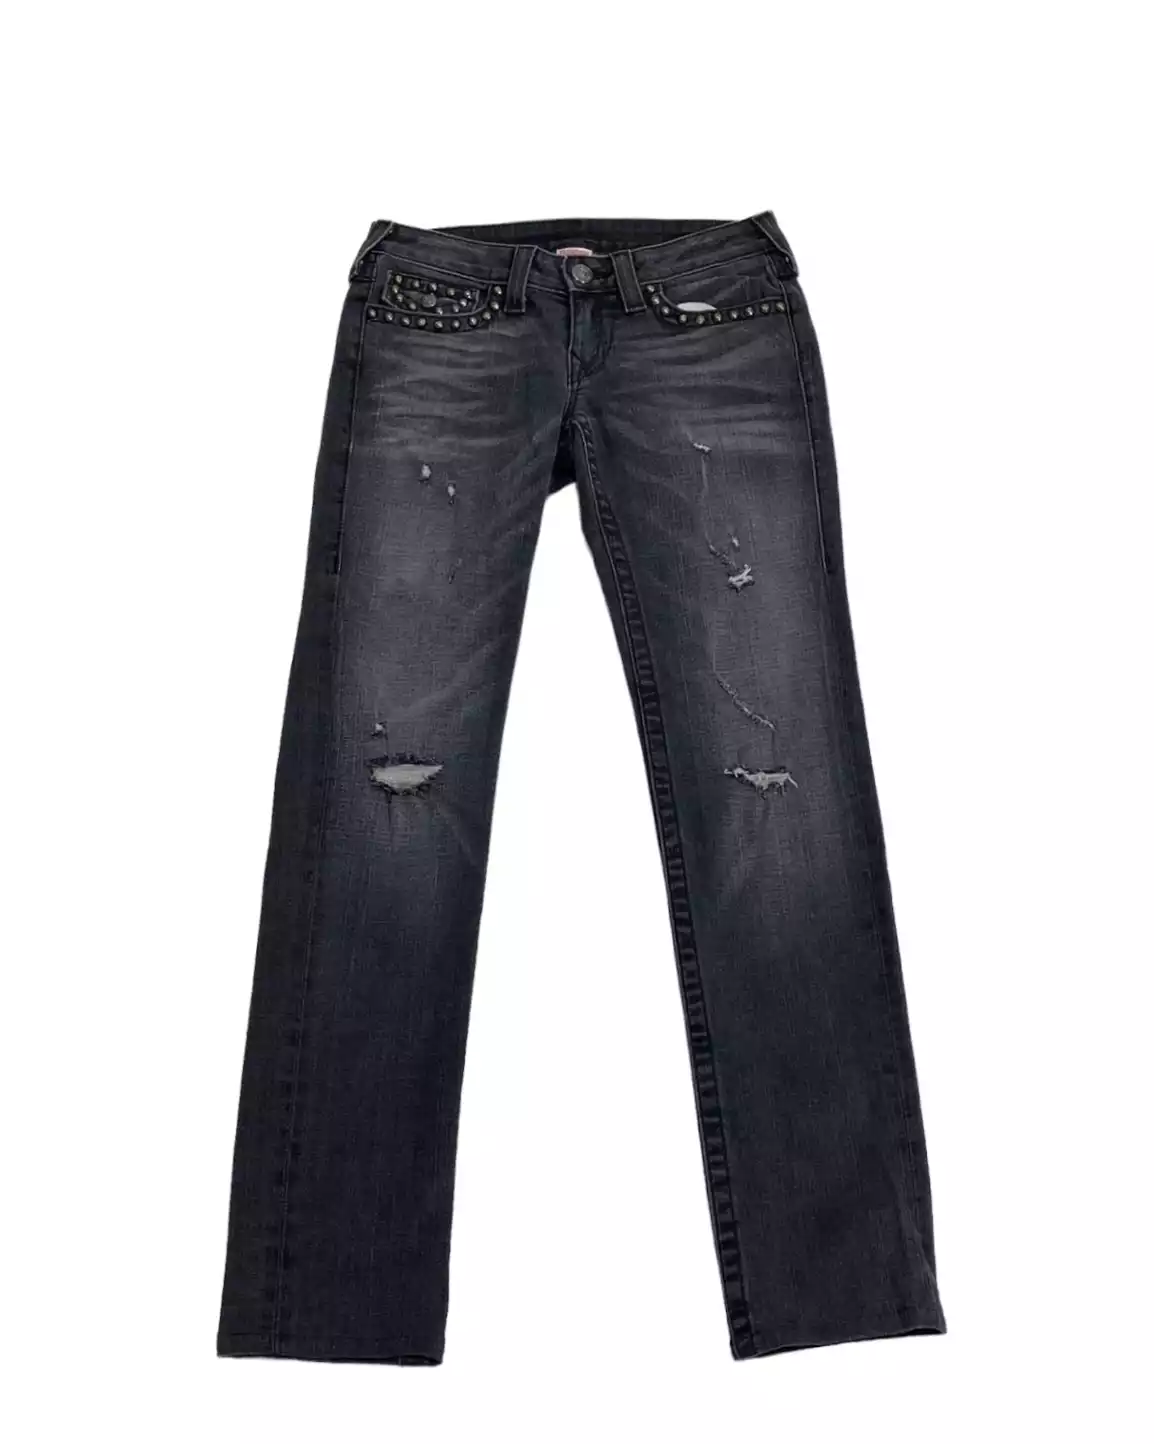 Denim Jeans by True Religion